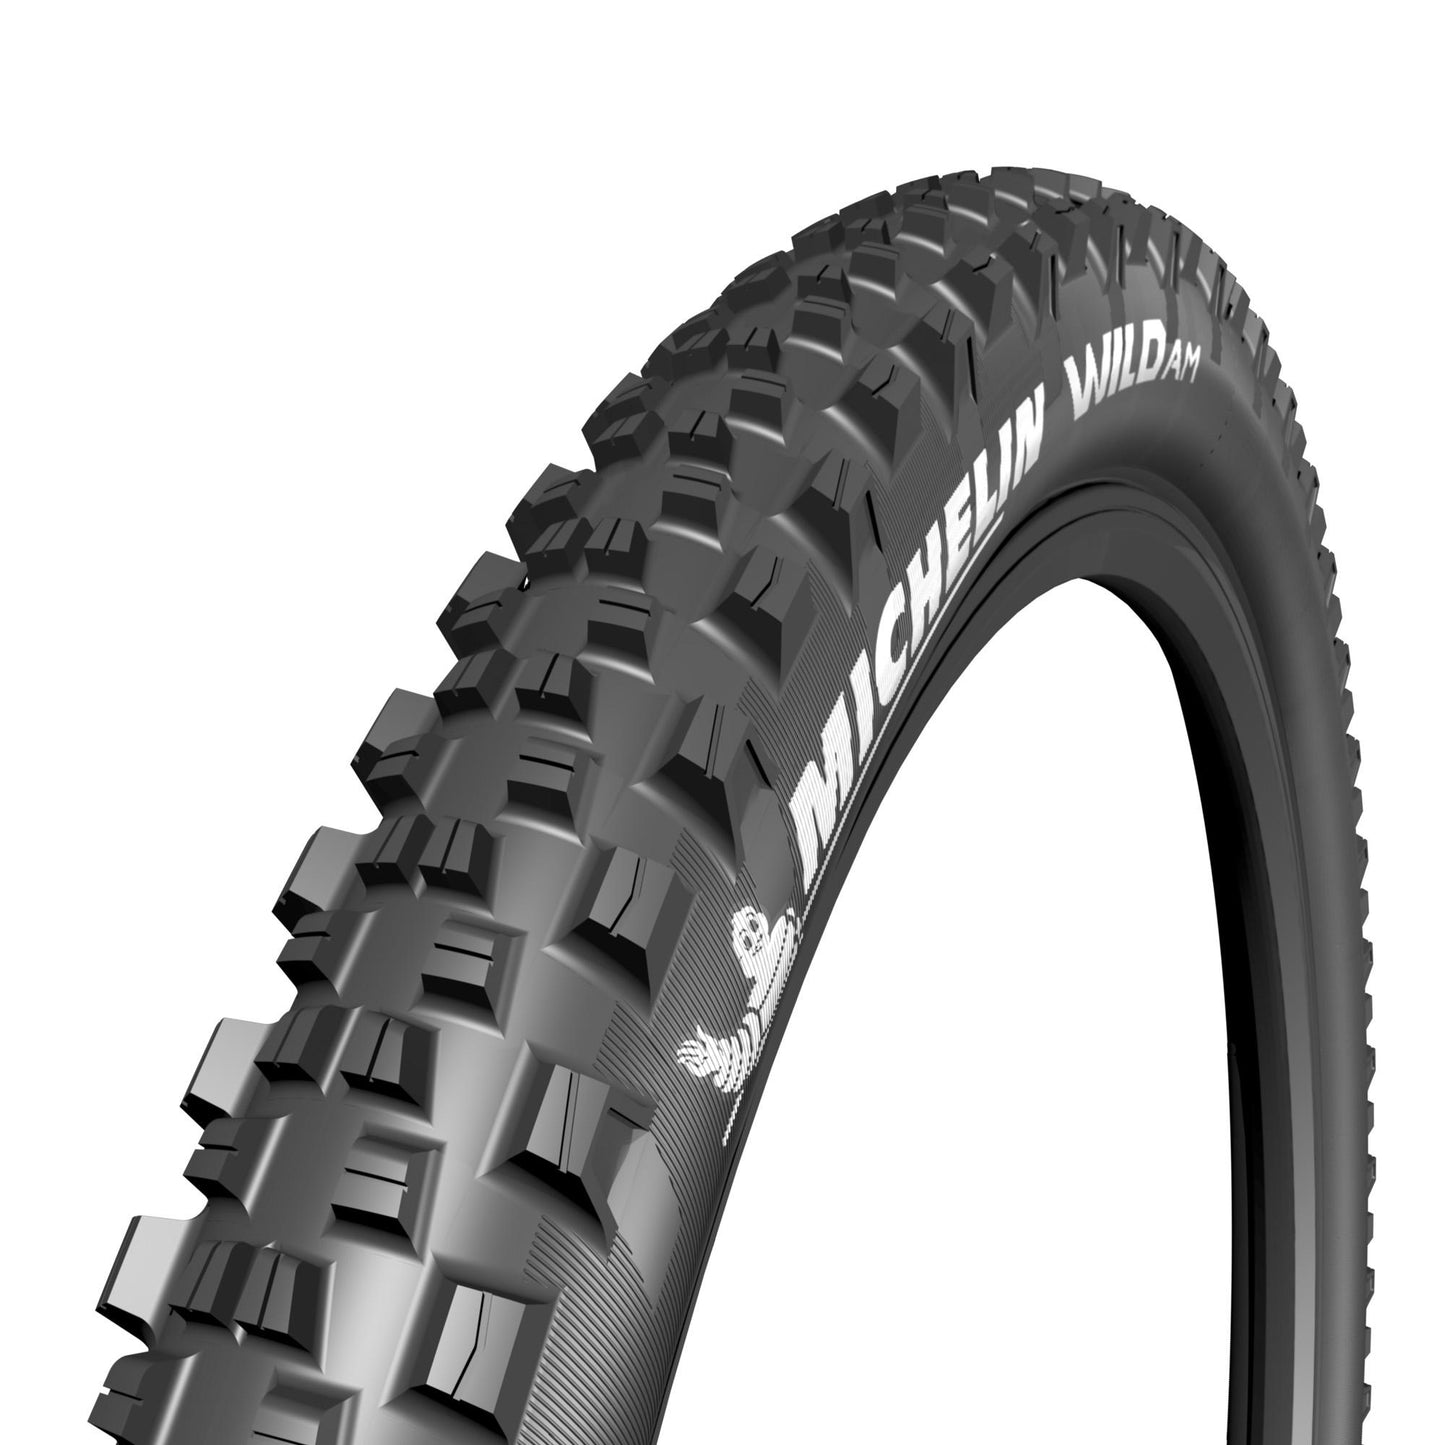 Michelin Wild AM Performance Line Tyre 27.5 x 2.35 (58-584)